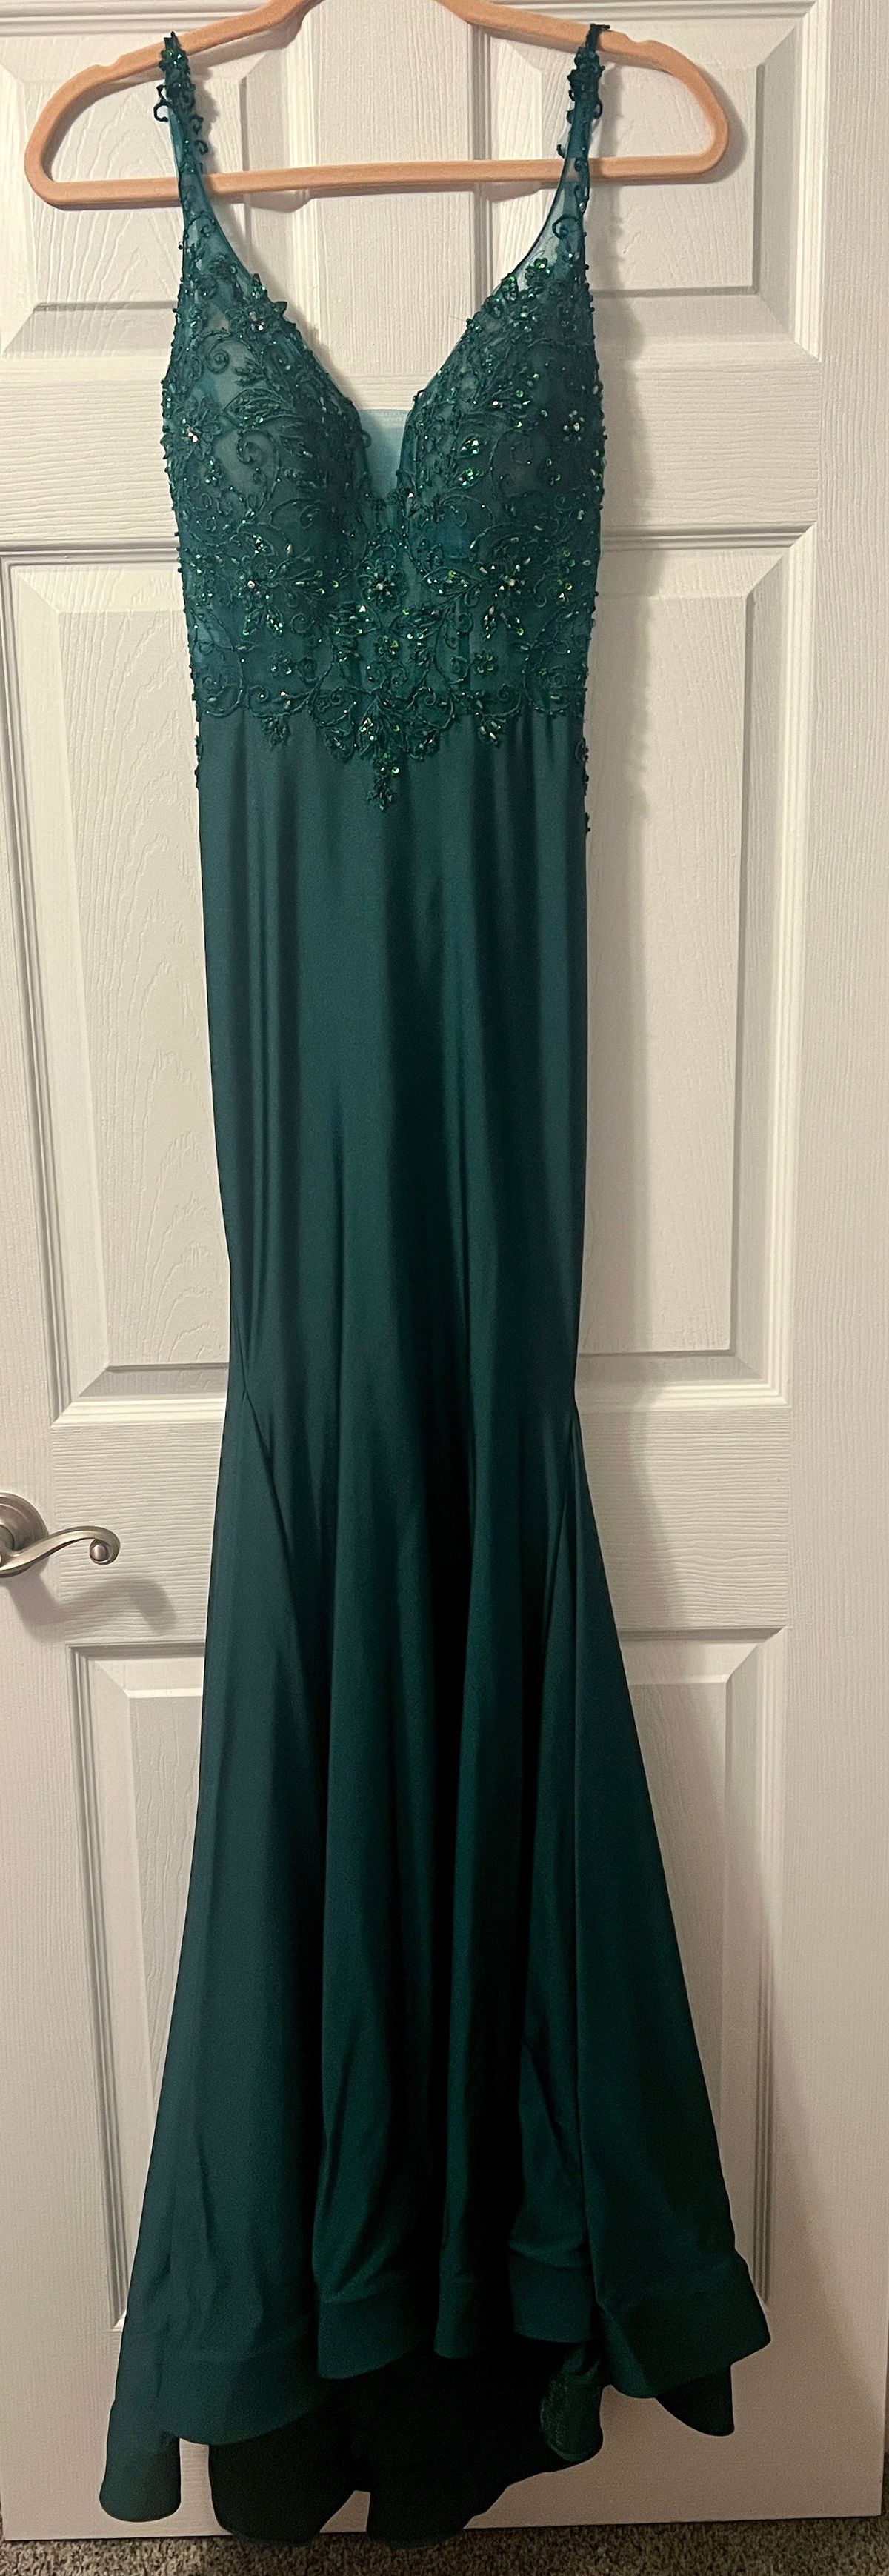 Ellie Wilde Size 2 Prom Plunge Emerald Green Mermaid Dress on Queenly